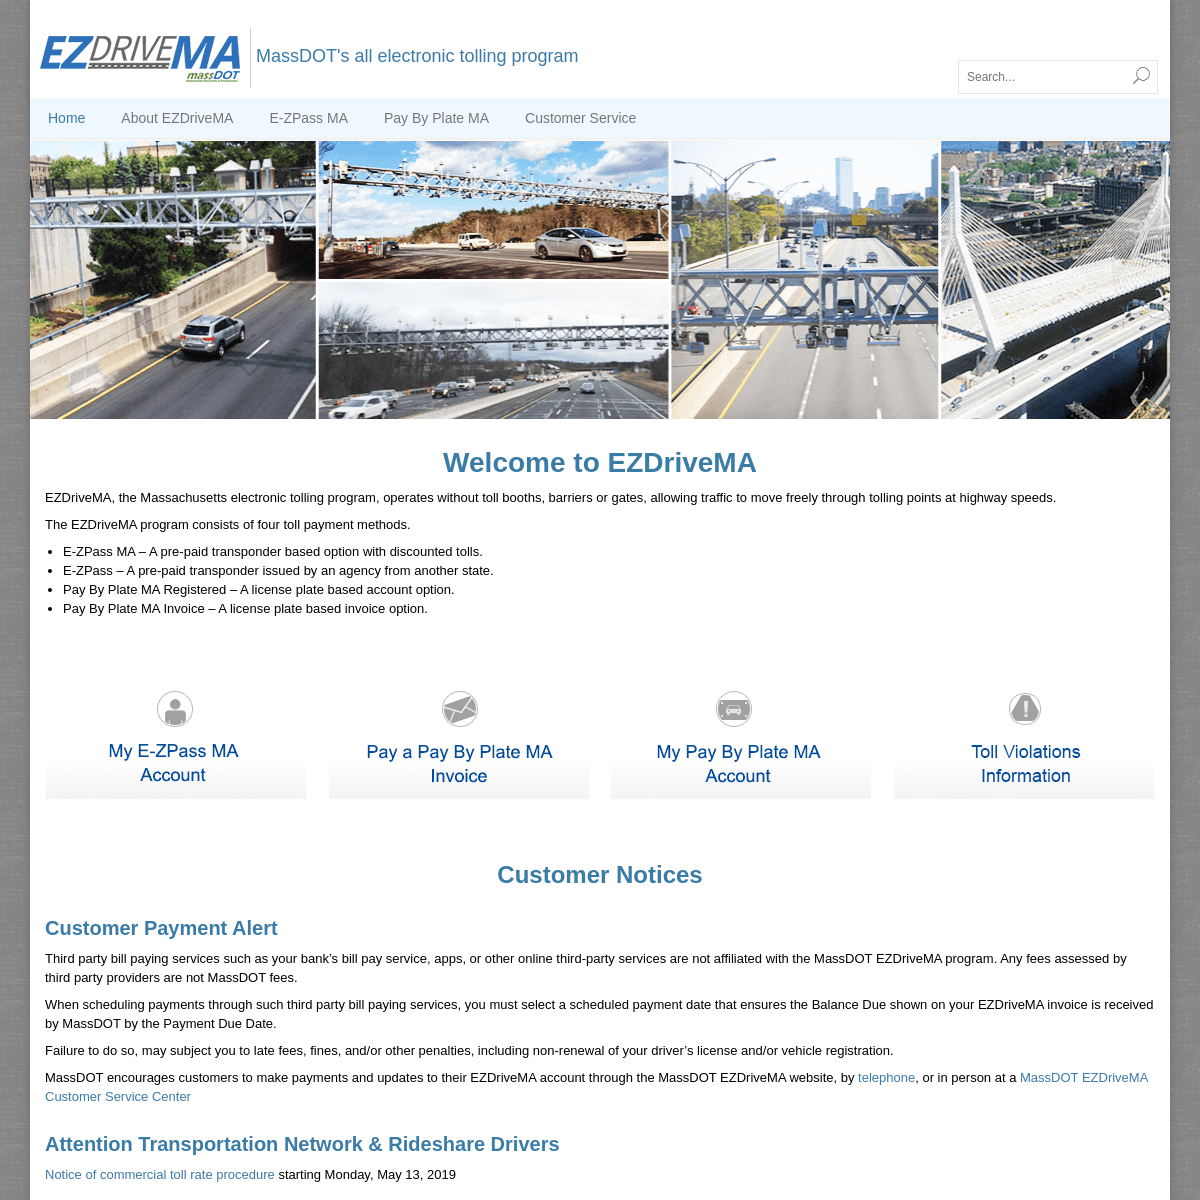 A complete backup of ezdrivema.com